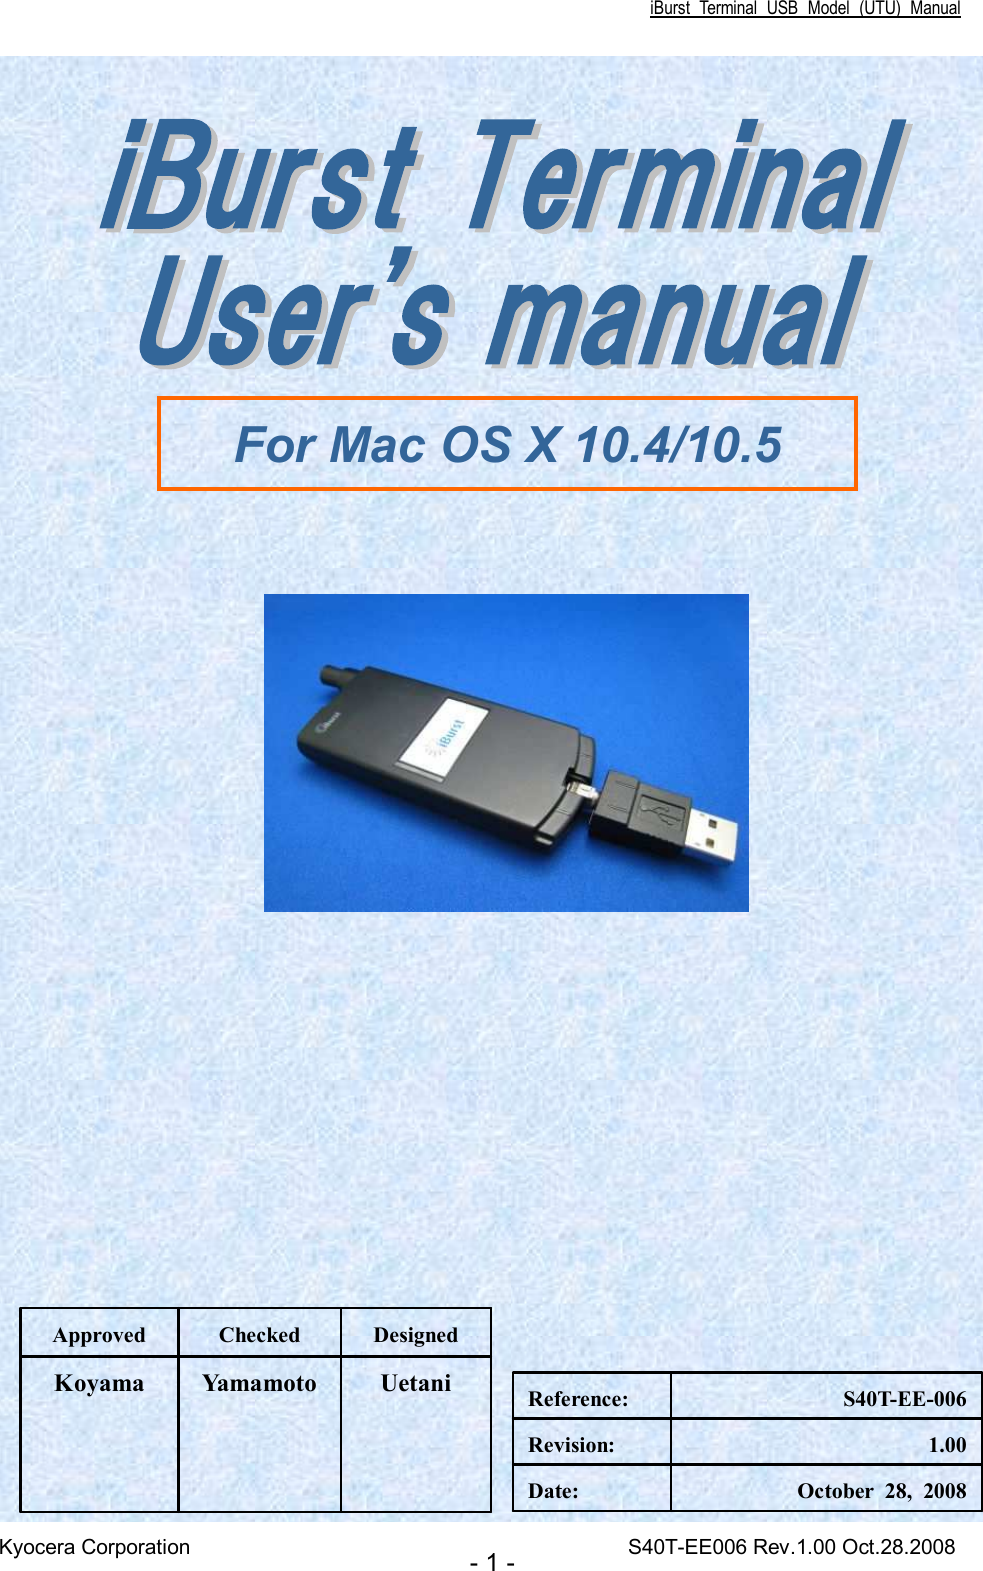 iBurst  Terminal  USB  Model  (UTU)  Manual Kyocera Corporation                                                                                    S40T-EE006 Rev.1.00 Oct.28.2008 - 1 -                             Uetani Yamamoto Koyama Designed Checked Approved October  28,  2008 Date: 1.00 Revision: S40T-EE-006 Reference: For Mac OS X 10.4/10.5 